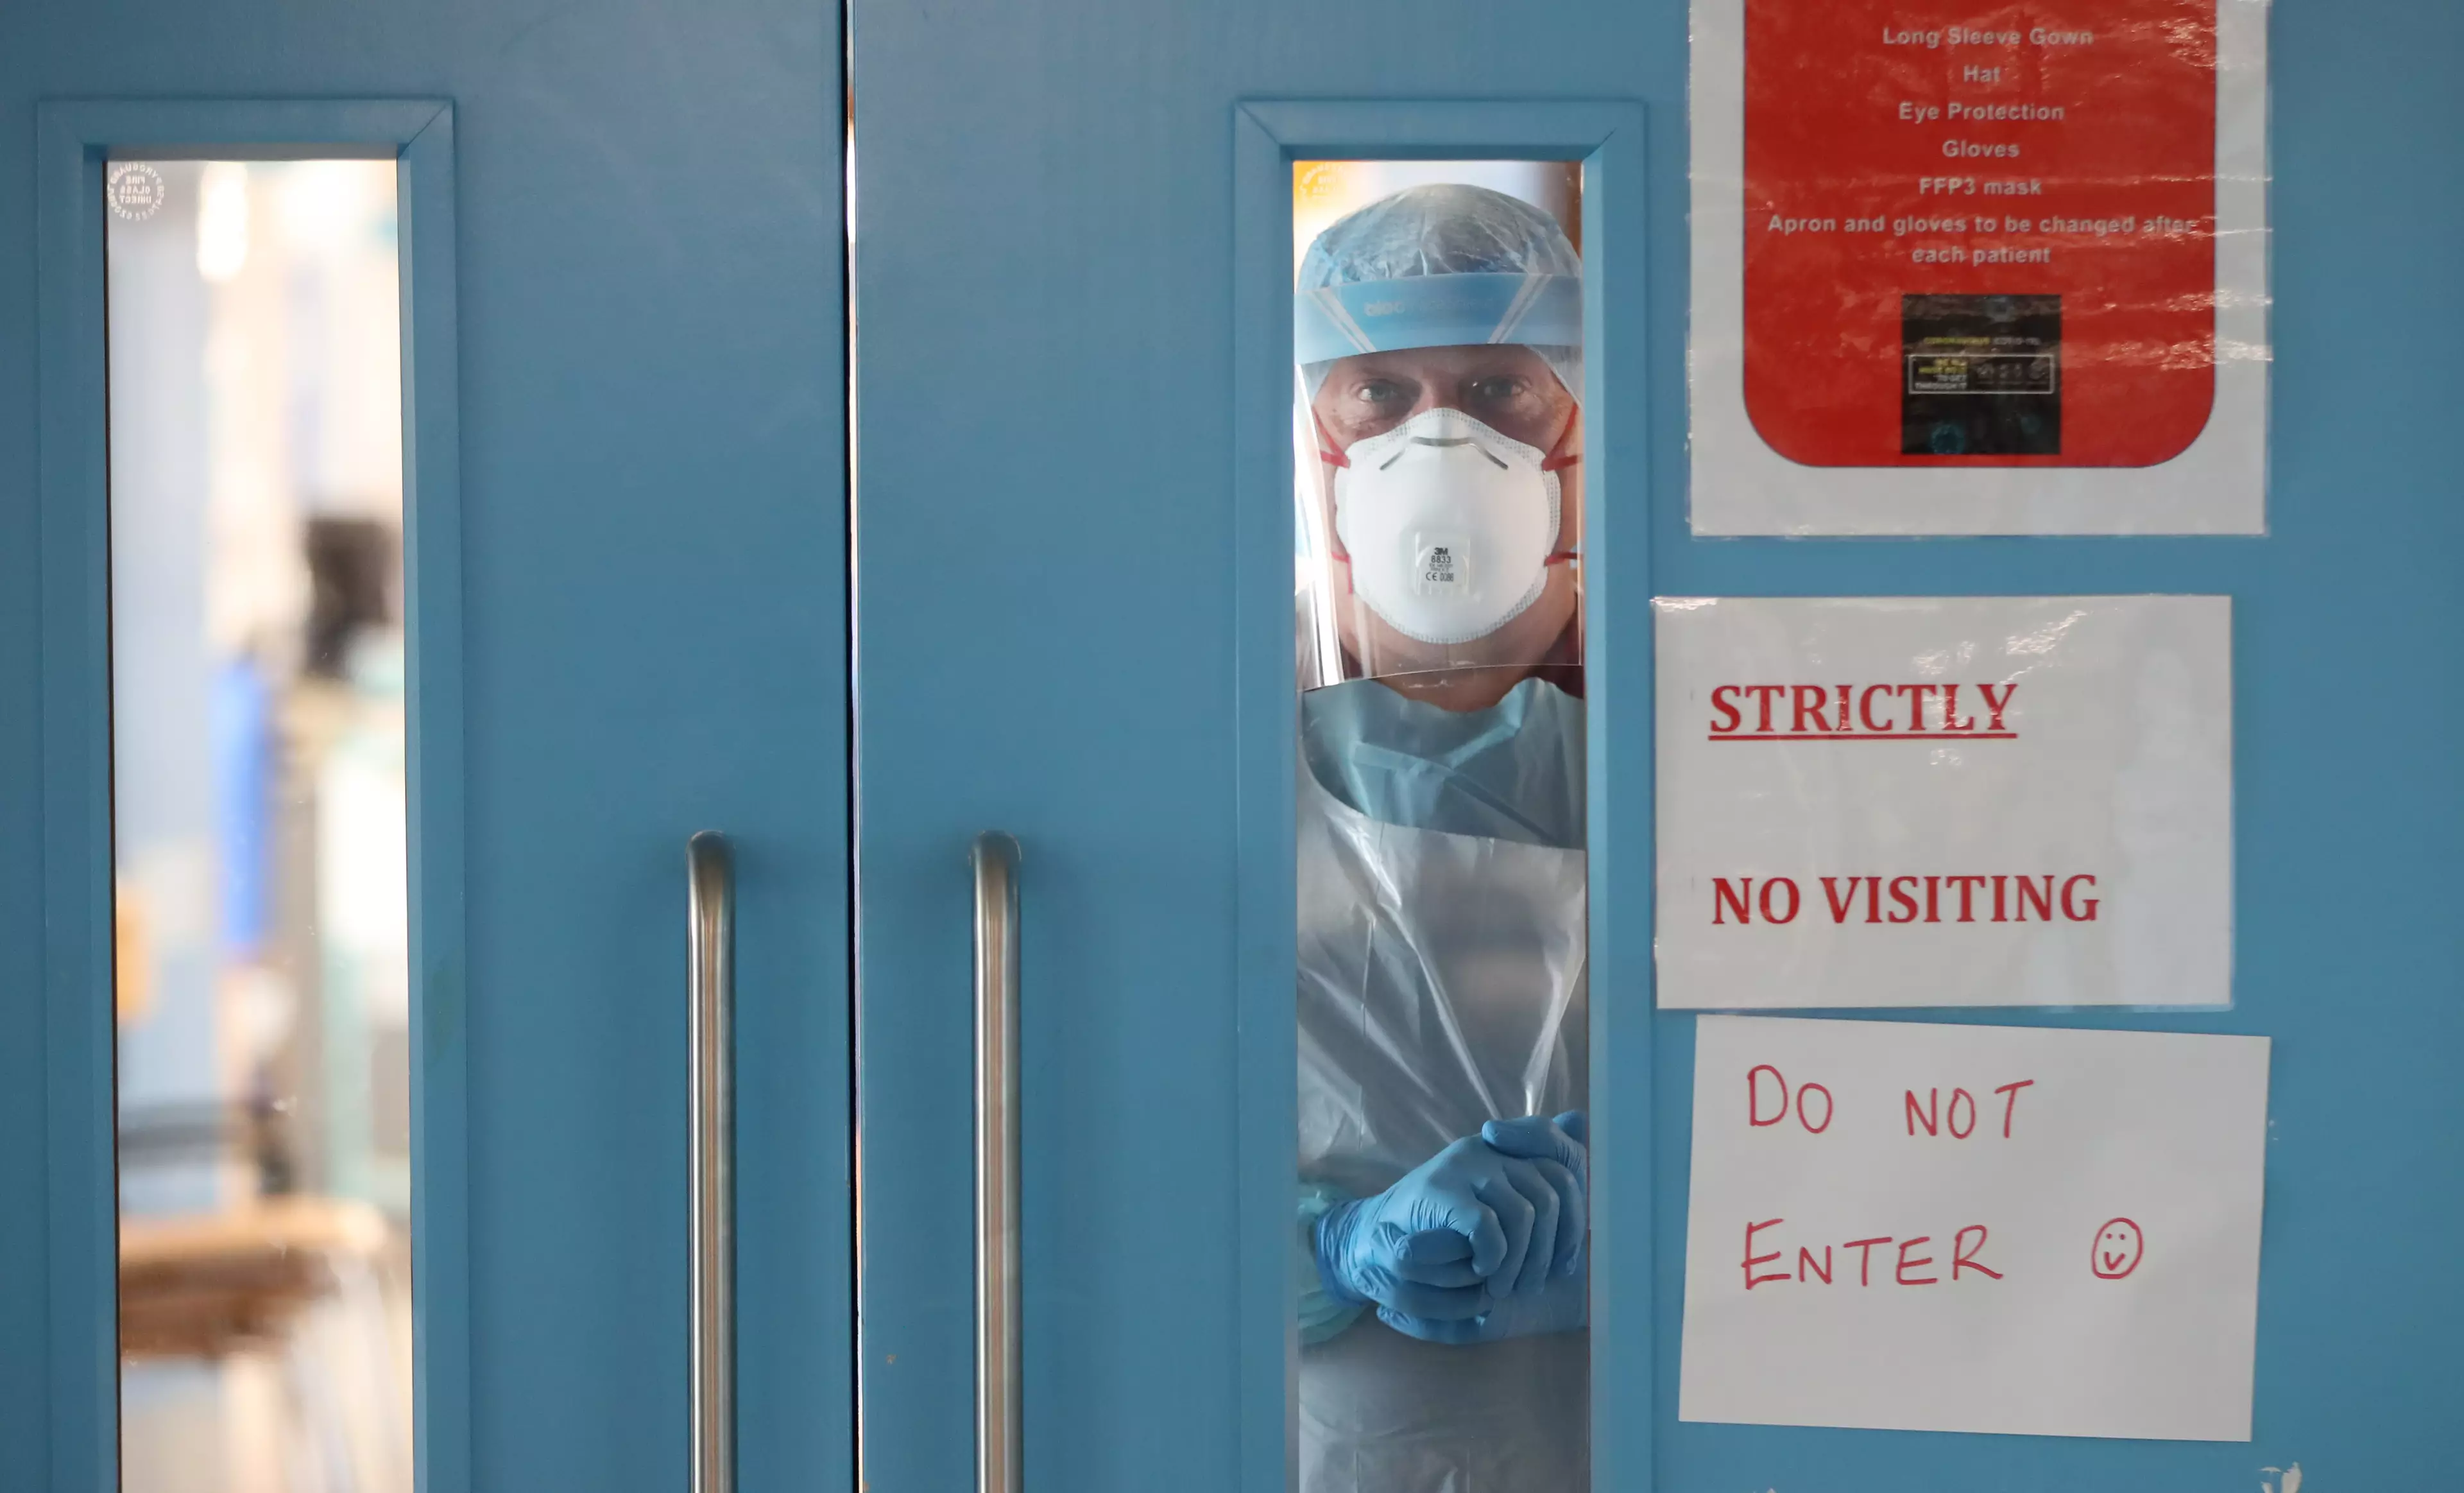 The coronavirus pandemic has worsened over the last few weeks (